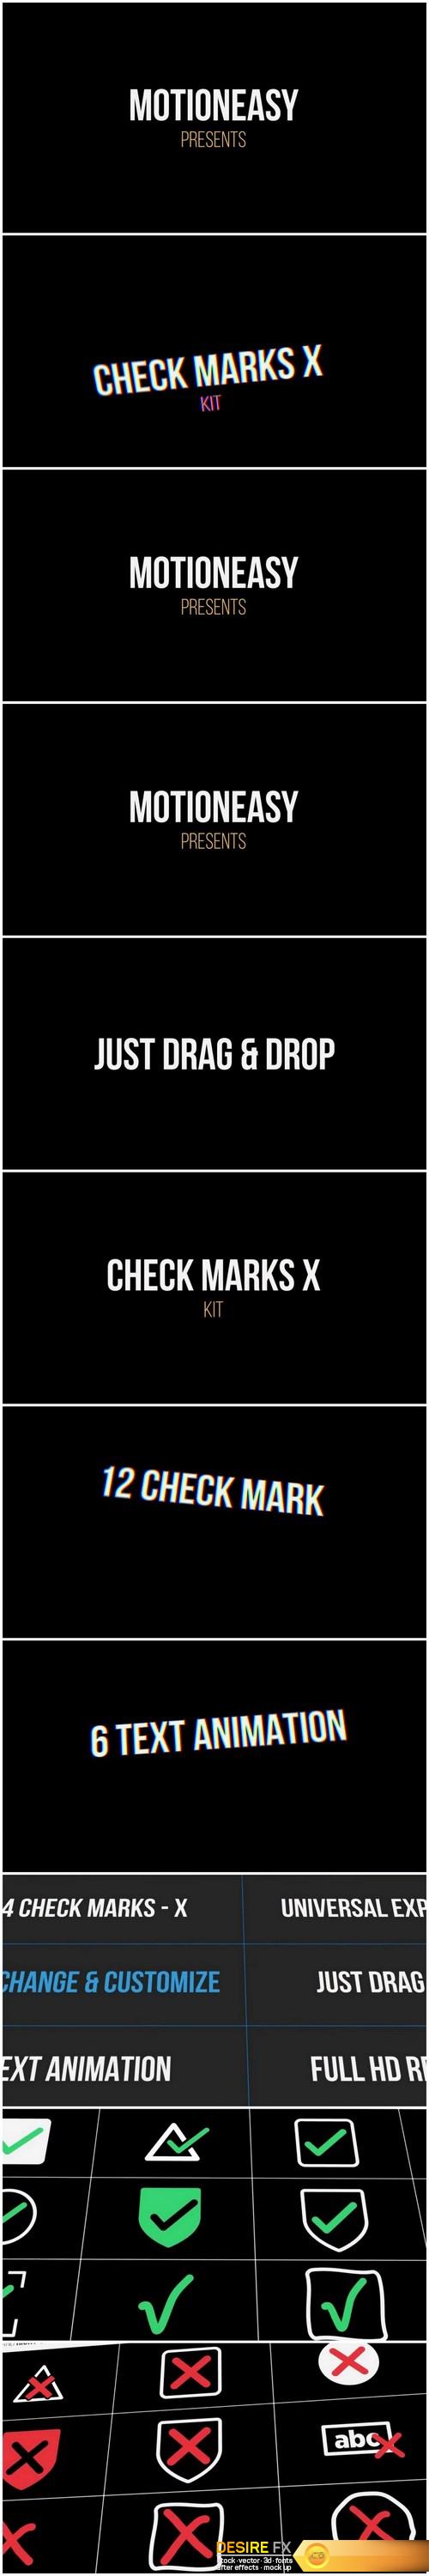 Check-marks-x-kit-34043